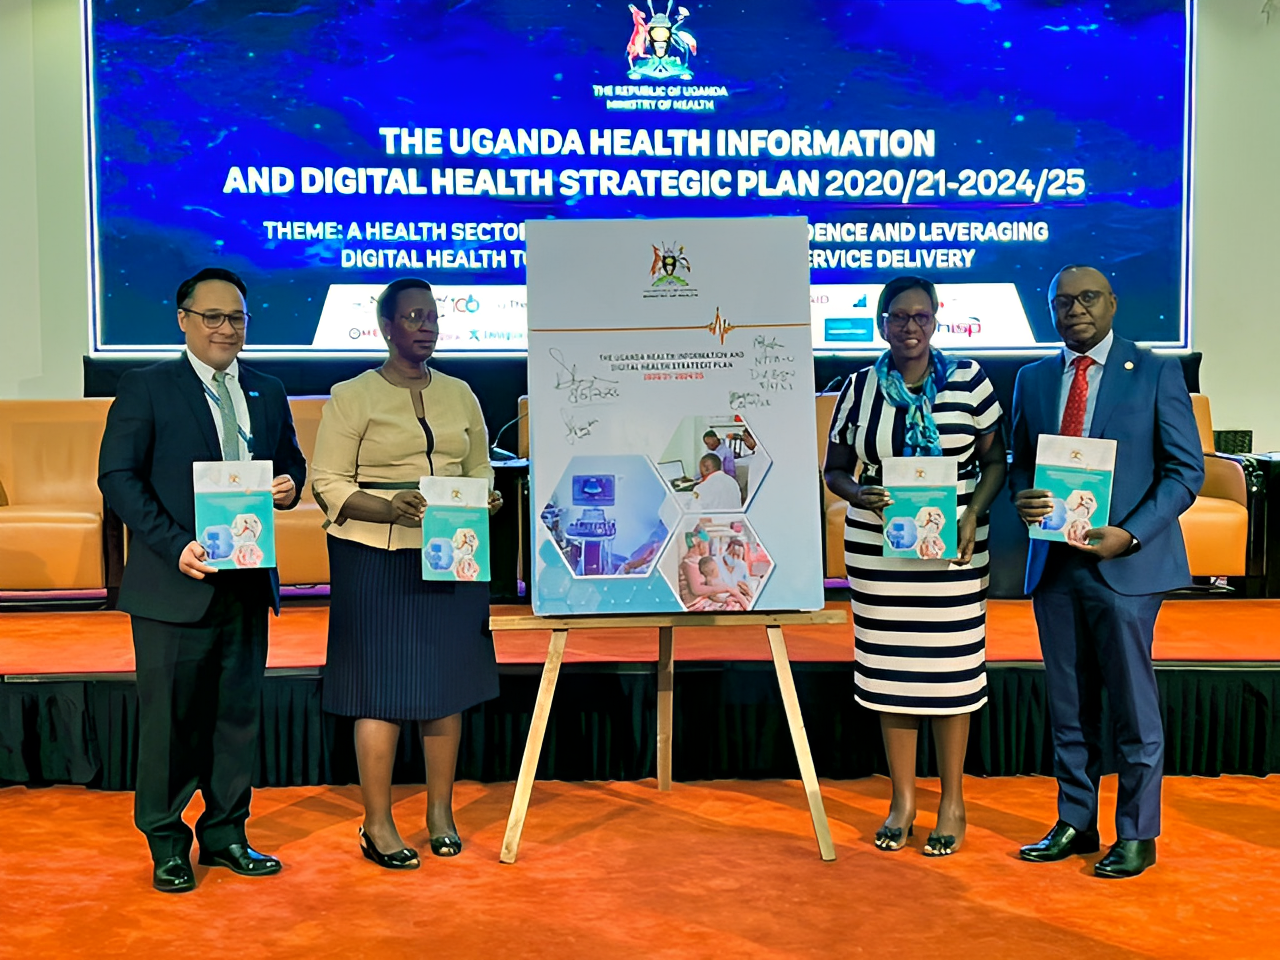 Launch of the digital health strategic plan